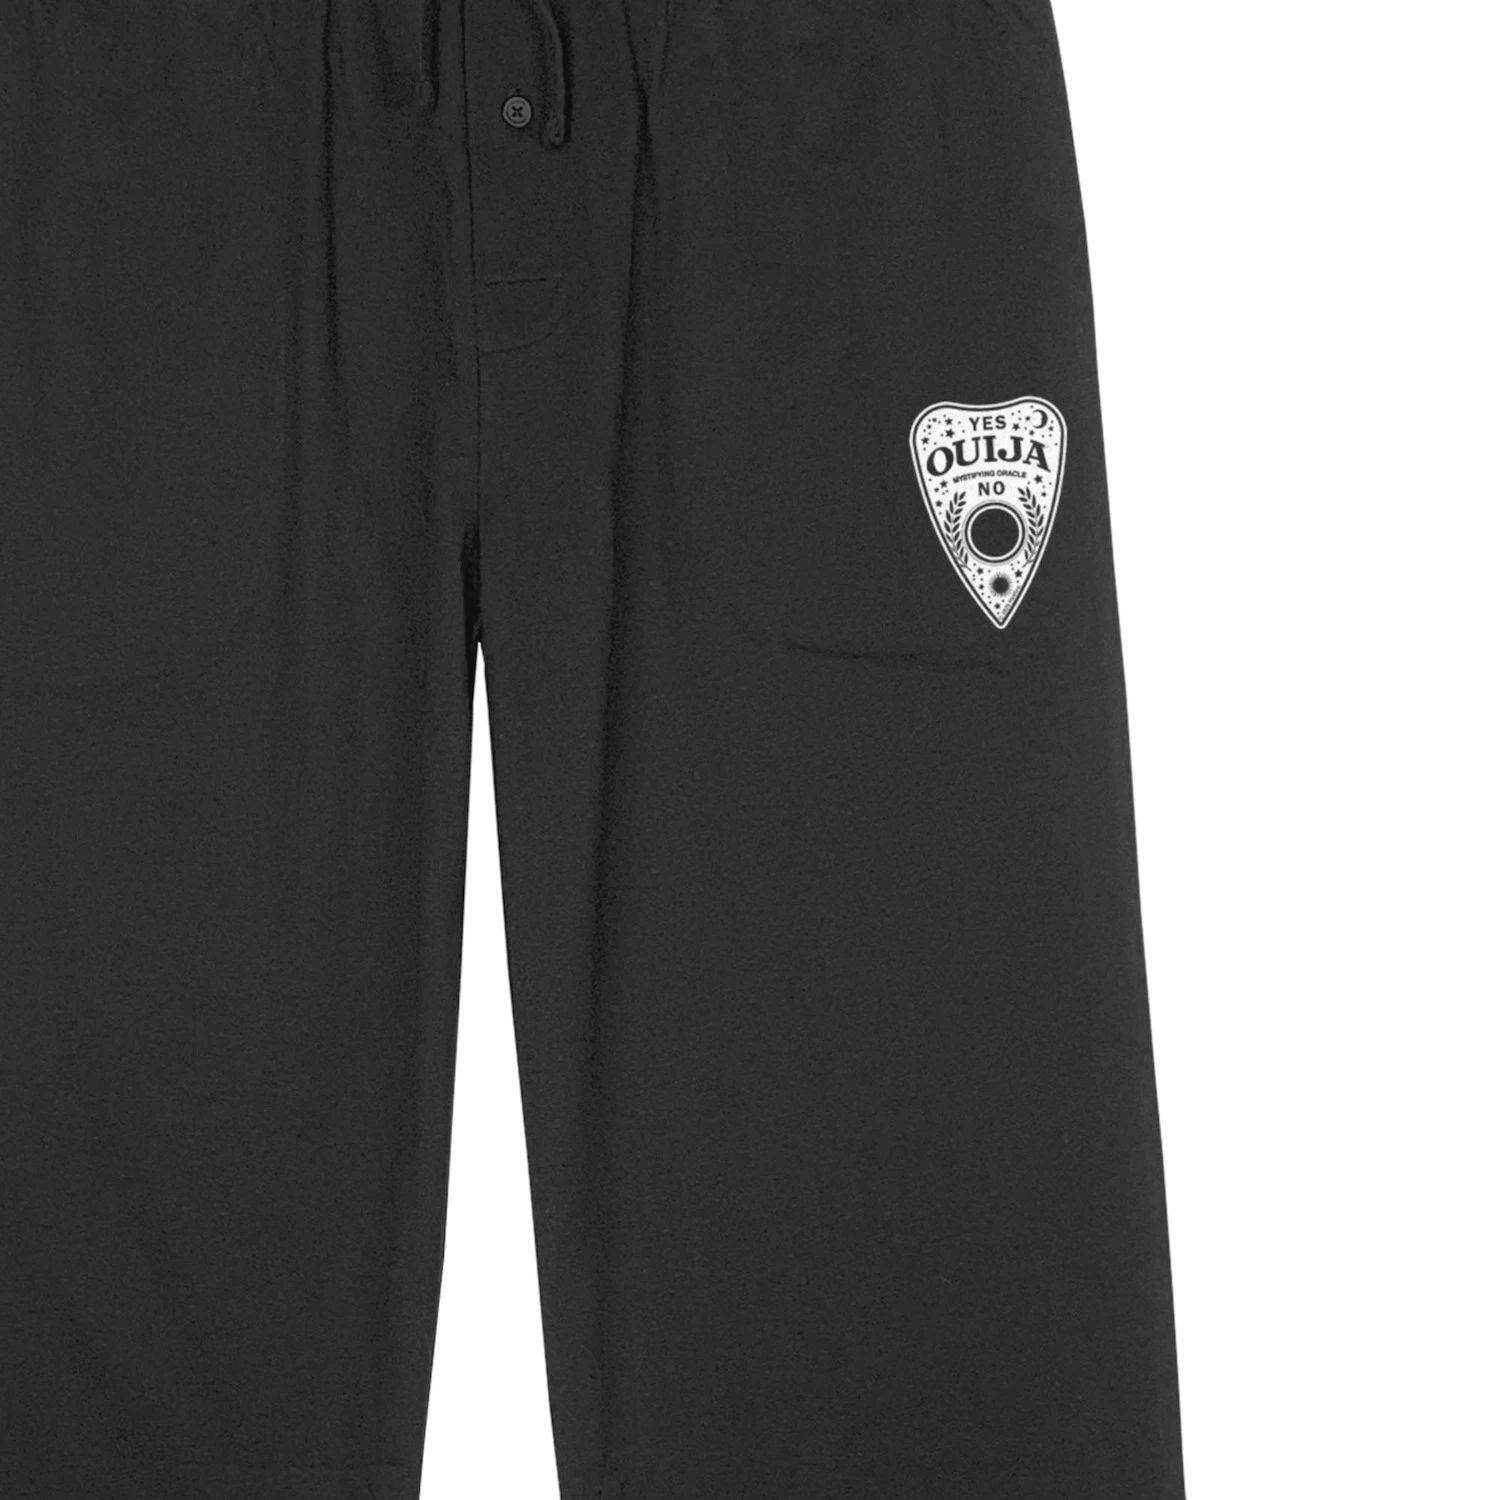 Мужские пижамные брюки с логотипом Hasbro Ouija Licensed Character мужские пижамные штаны hasbro с логотипом distress risk licensed character